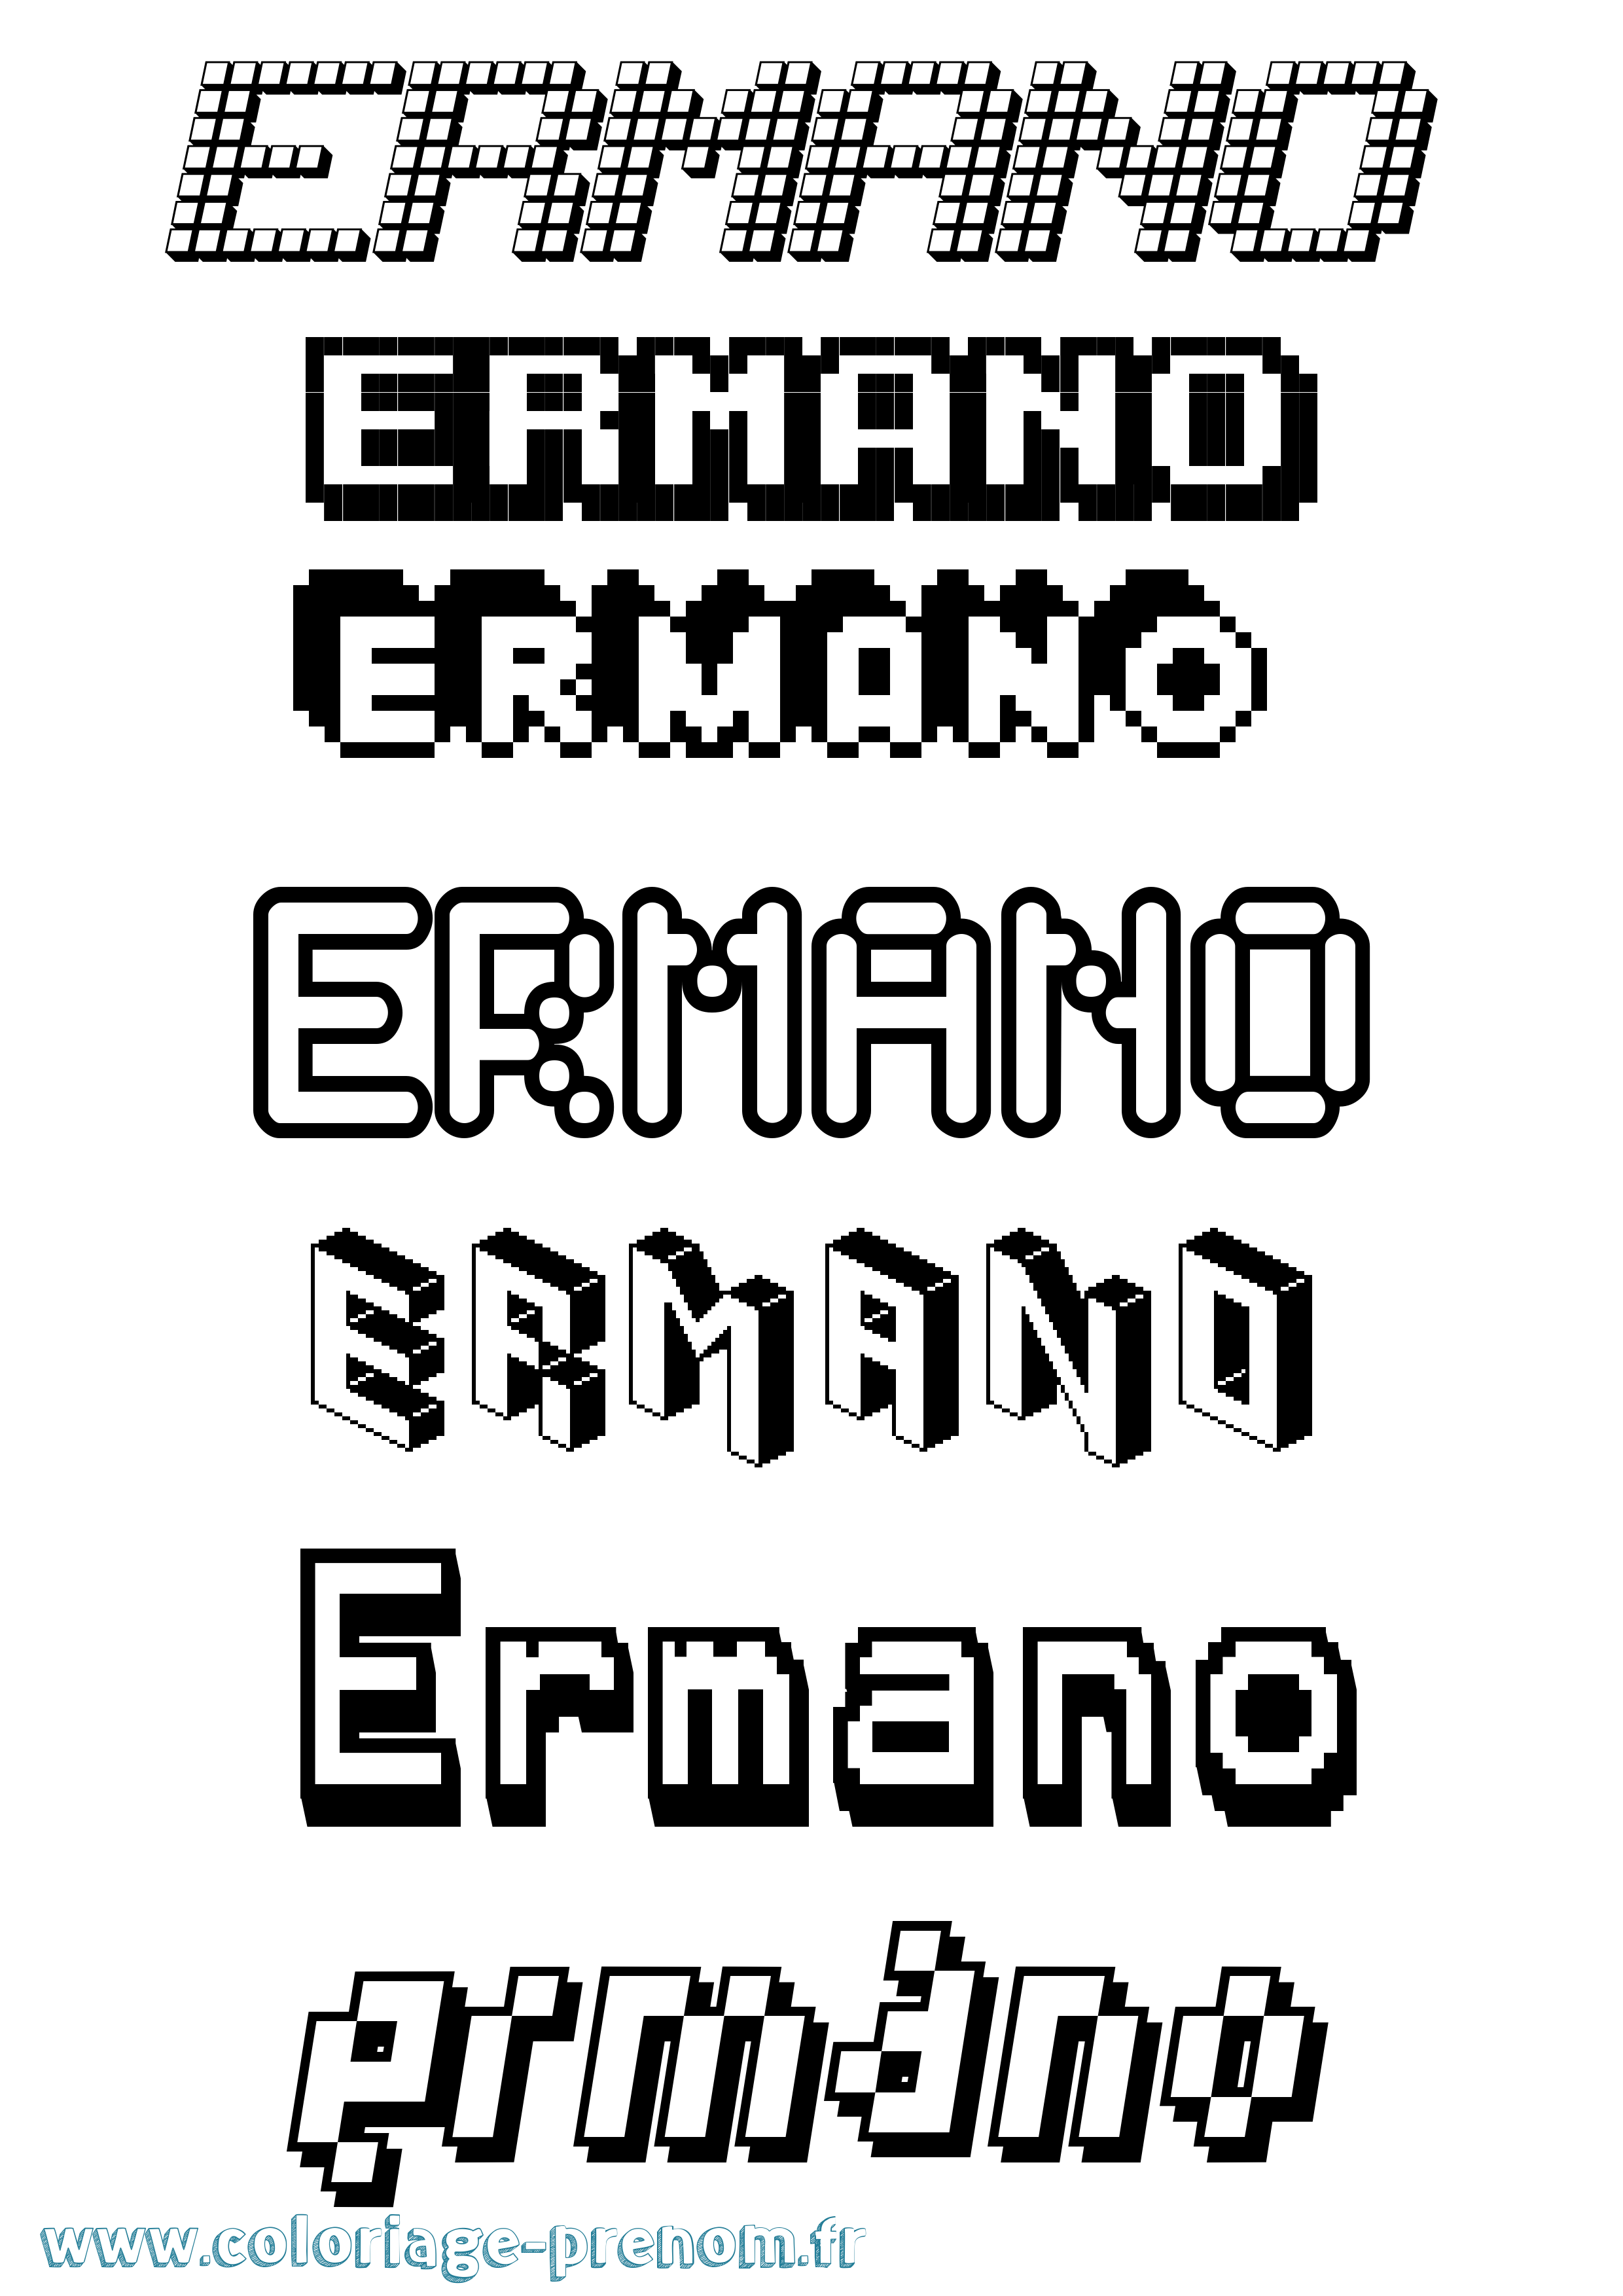 Coloriage prénom Ermano Pixel